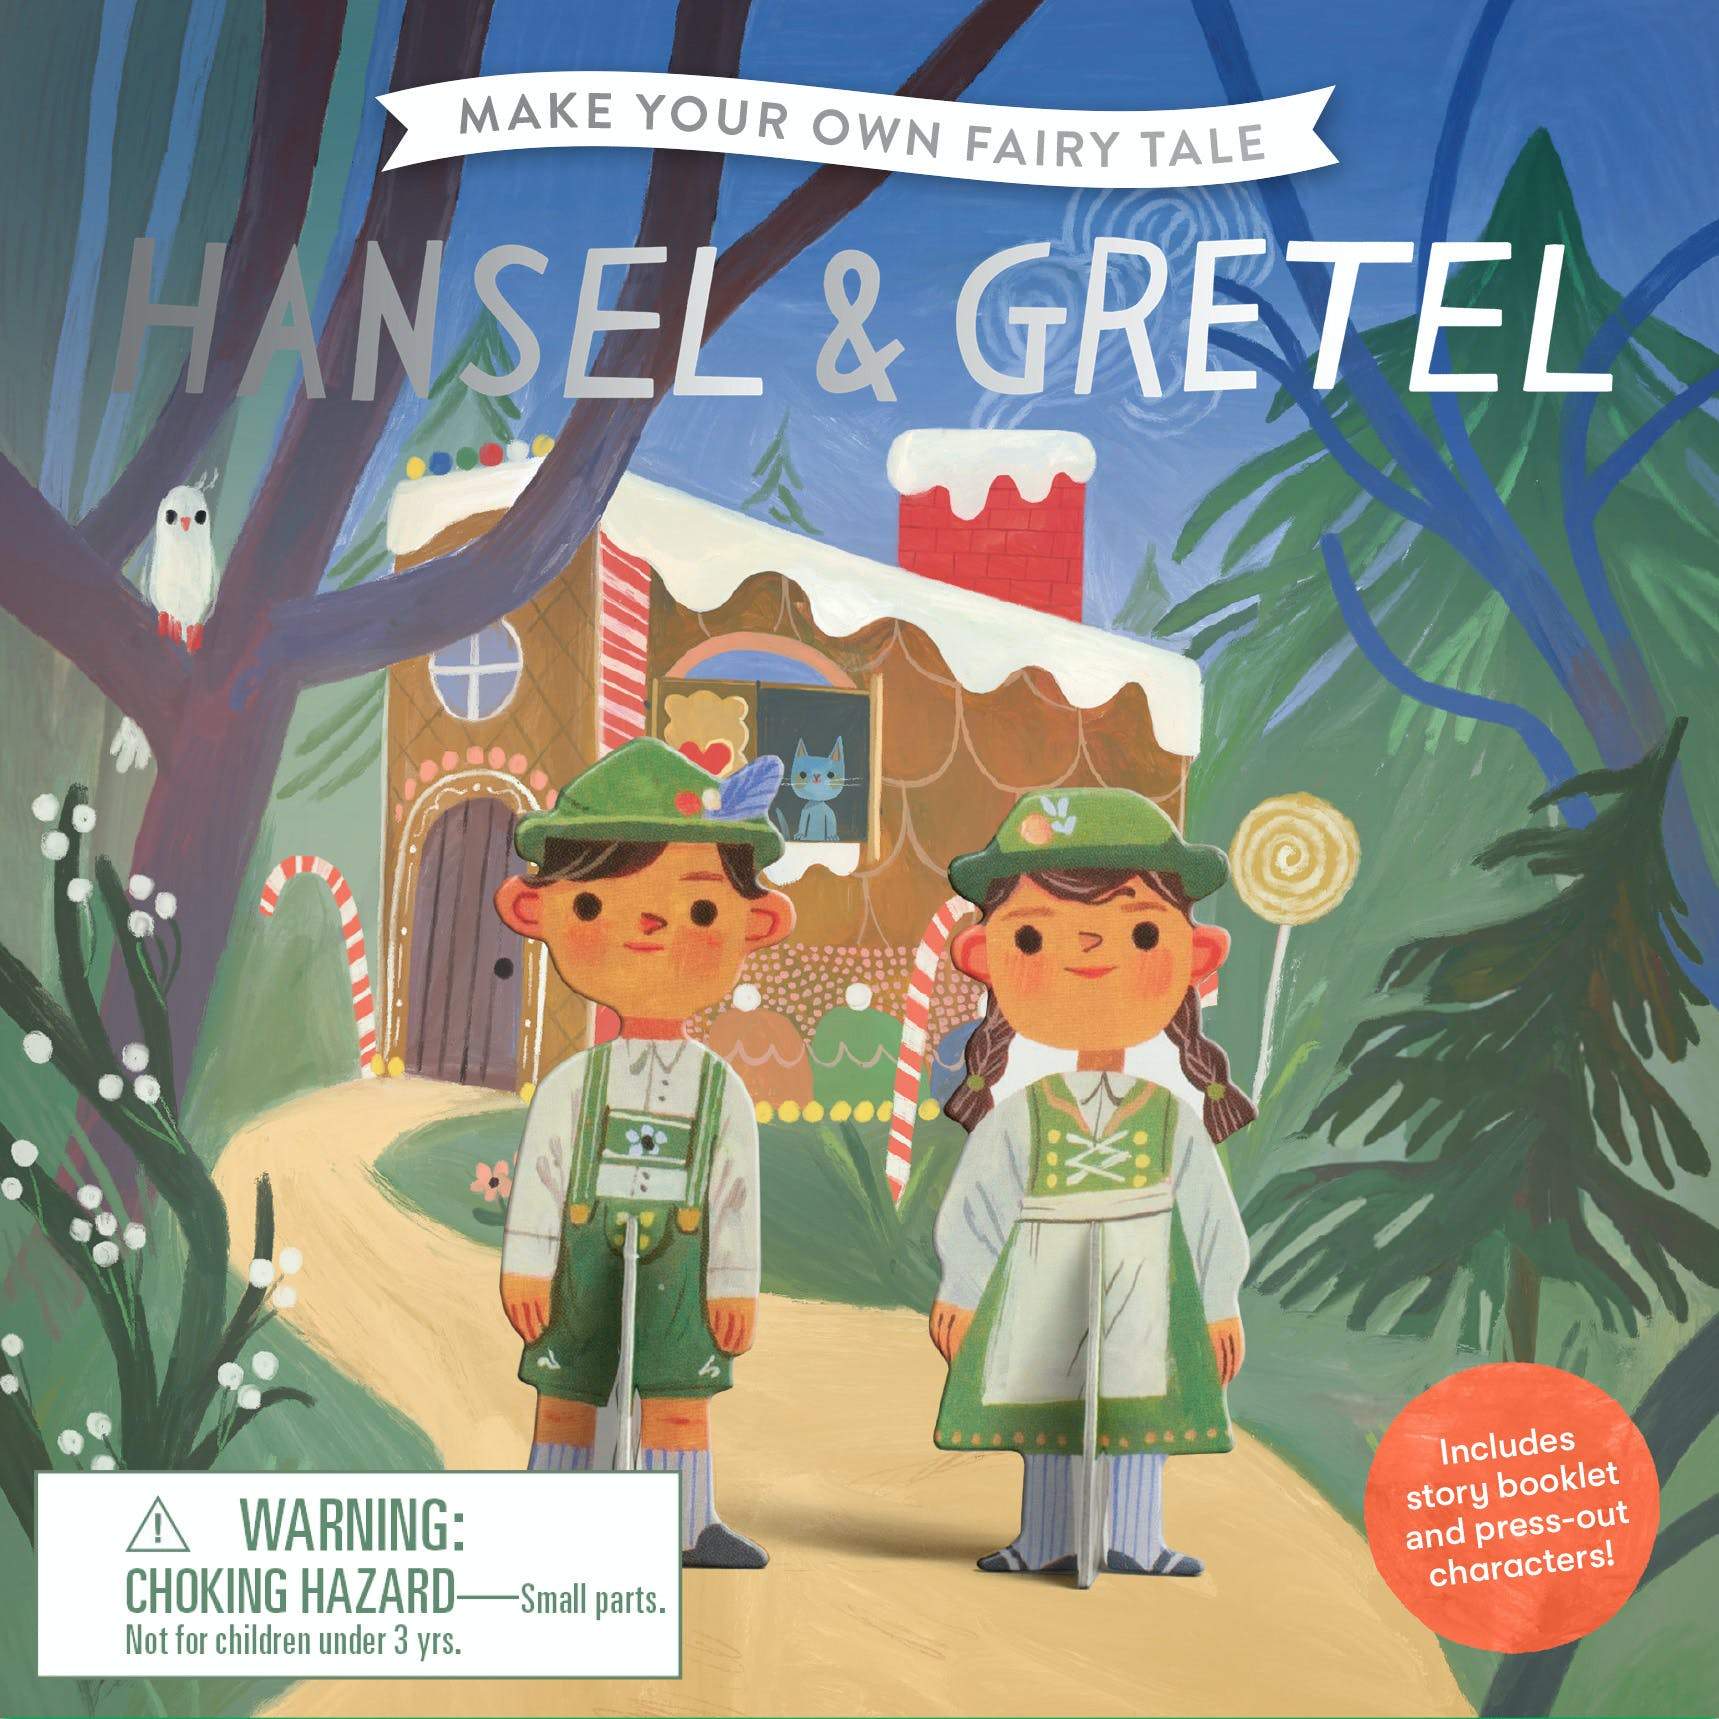 Hansel and Gretel: Make Your Own Fairytale BookGeek